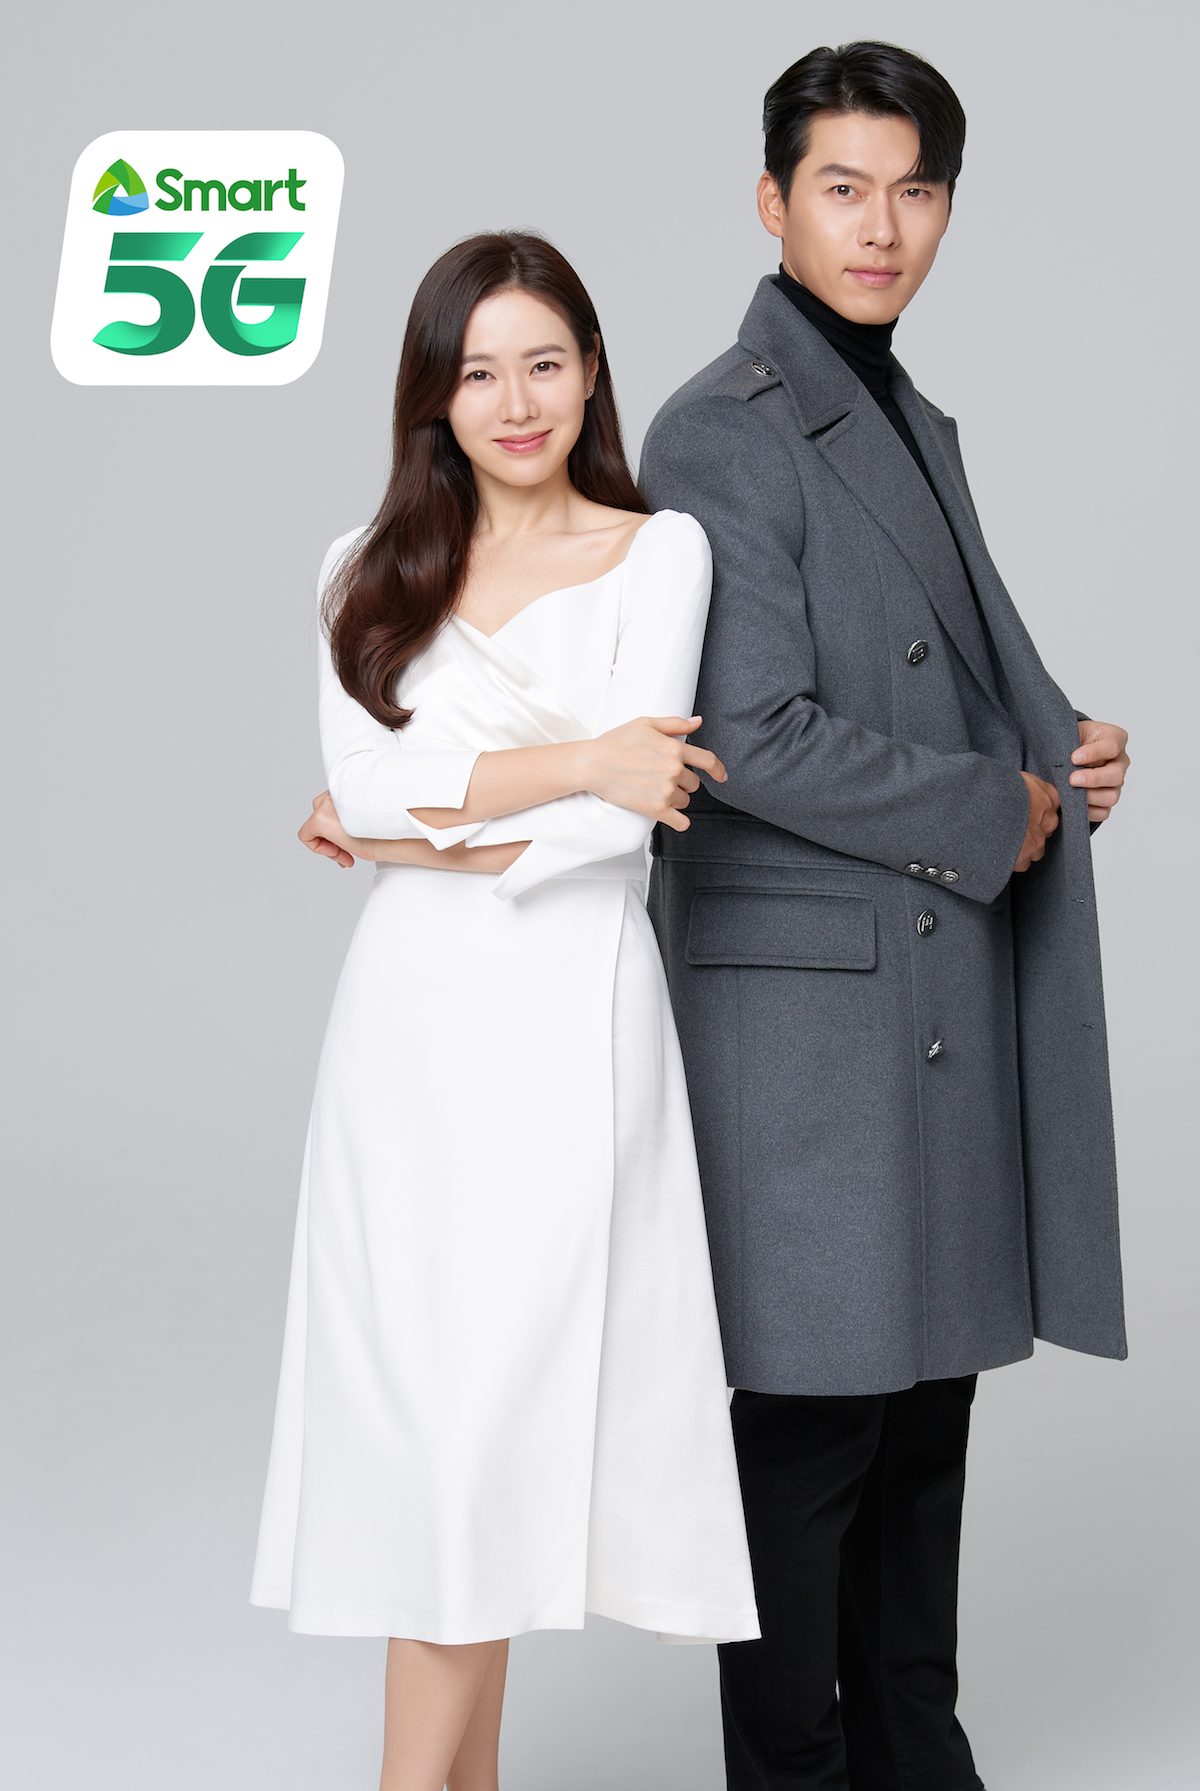 WATCH: Real-life couple Son Ye-jin, Hyun Bin star in Smart’s Valentine’s Day ad